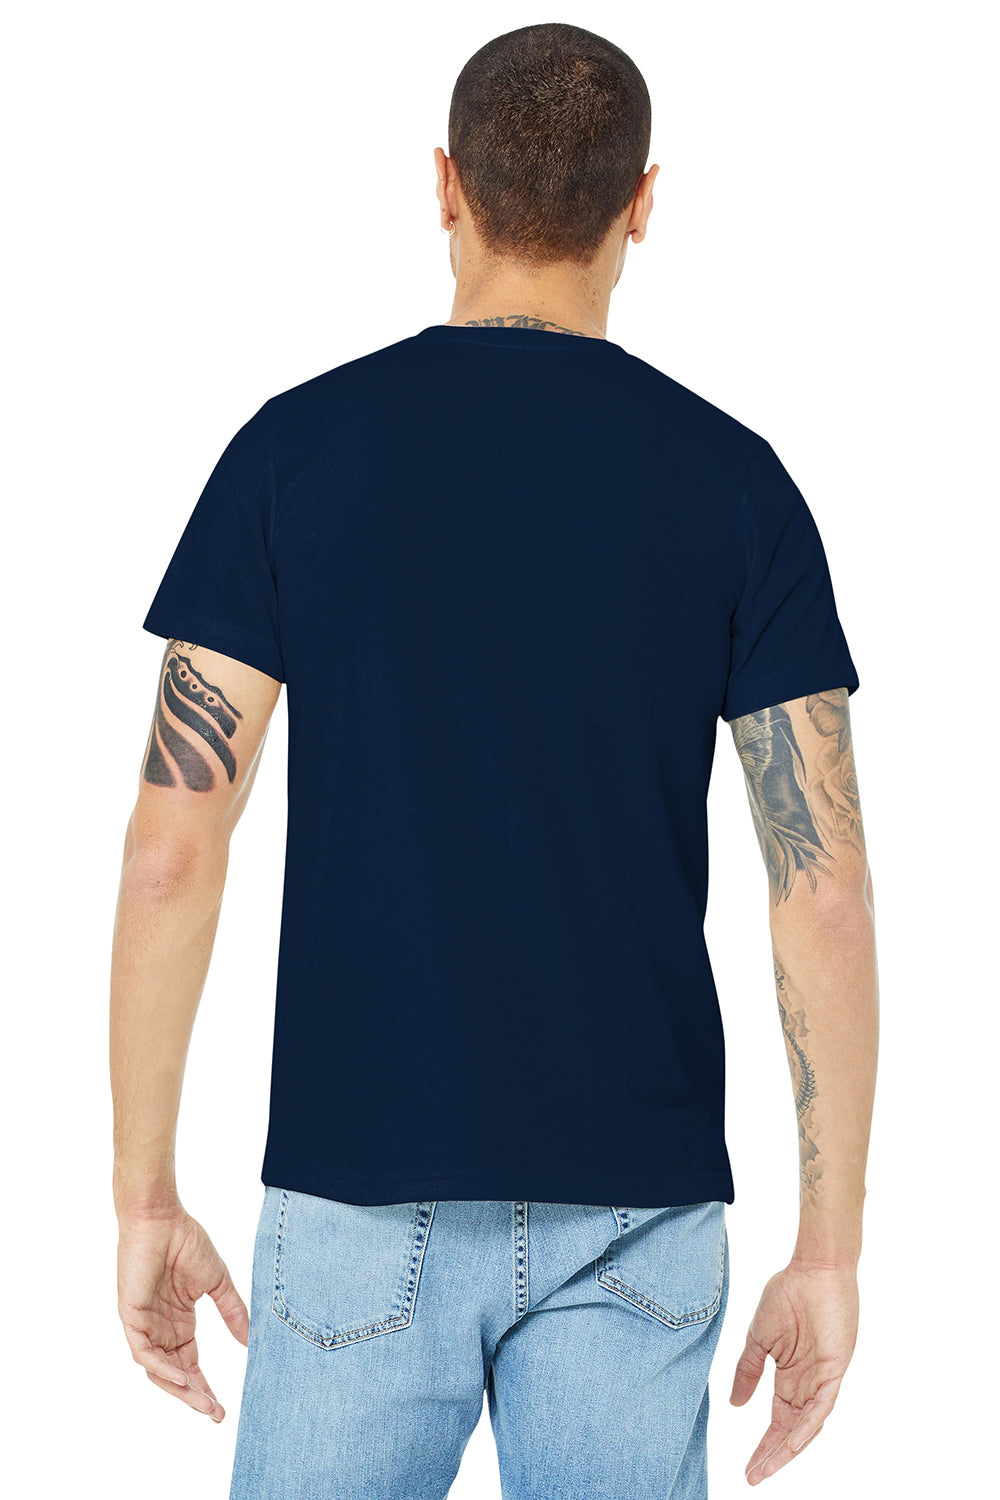 Bella + Canvas 3001U/3001USA Mens USA Made Jersey Short Sleeve Crewneck T-Shirt Navy Blue Model Back